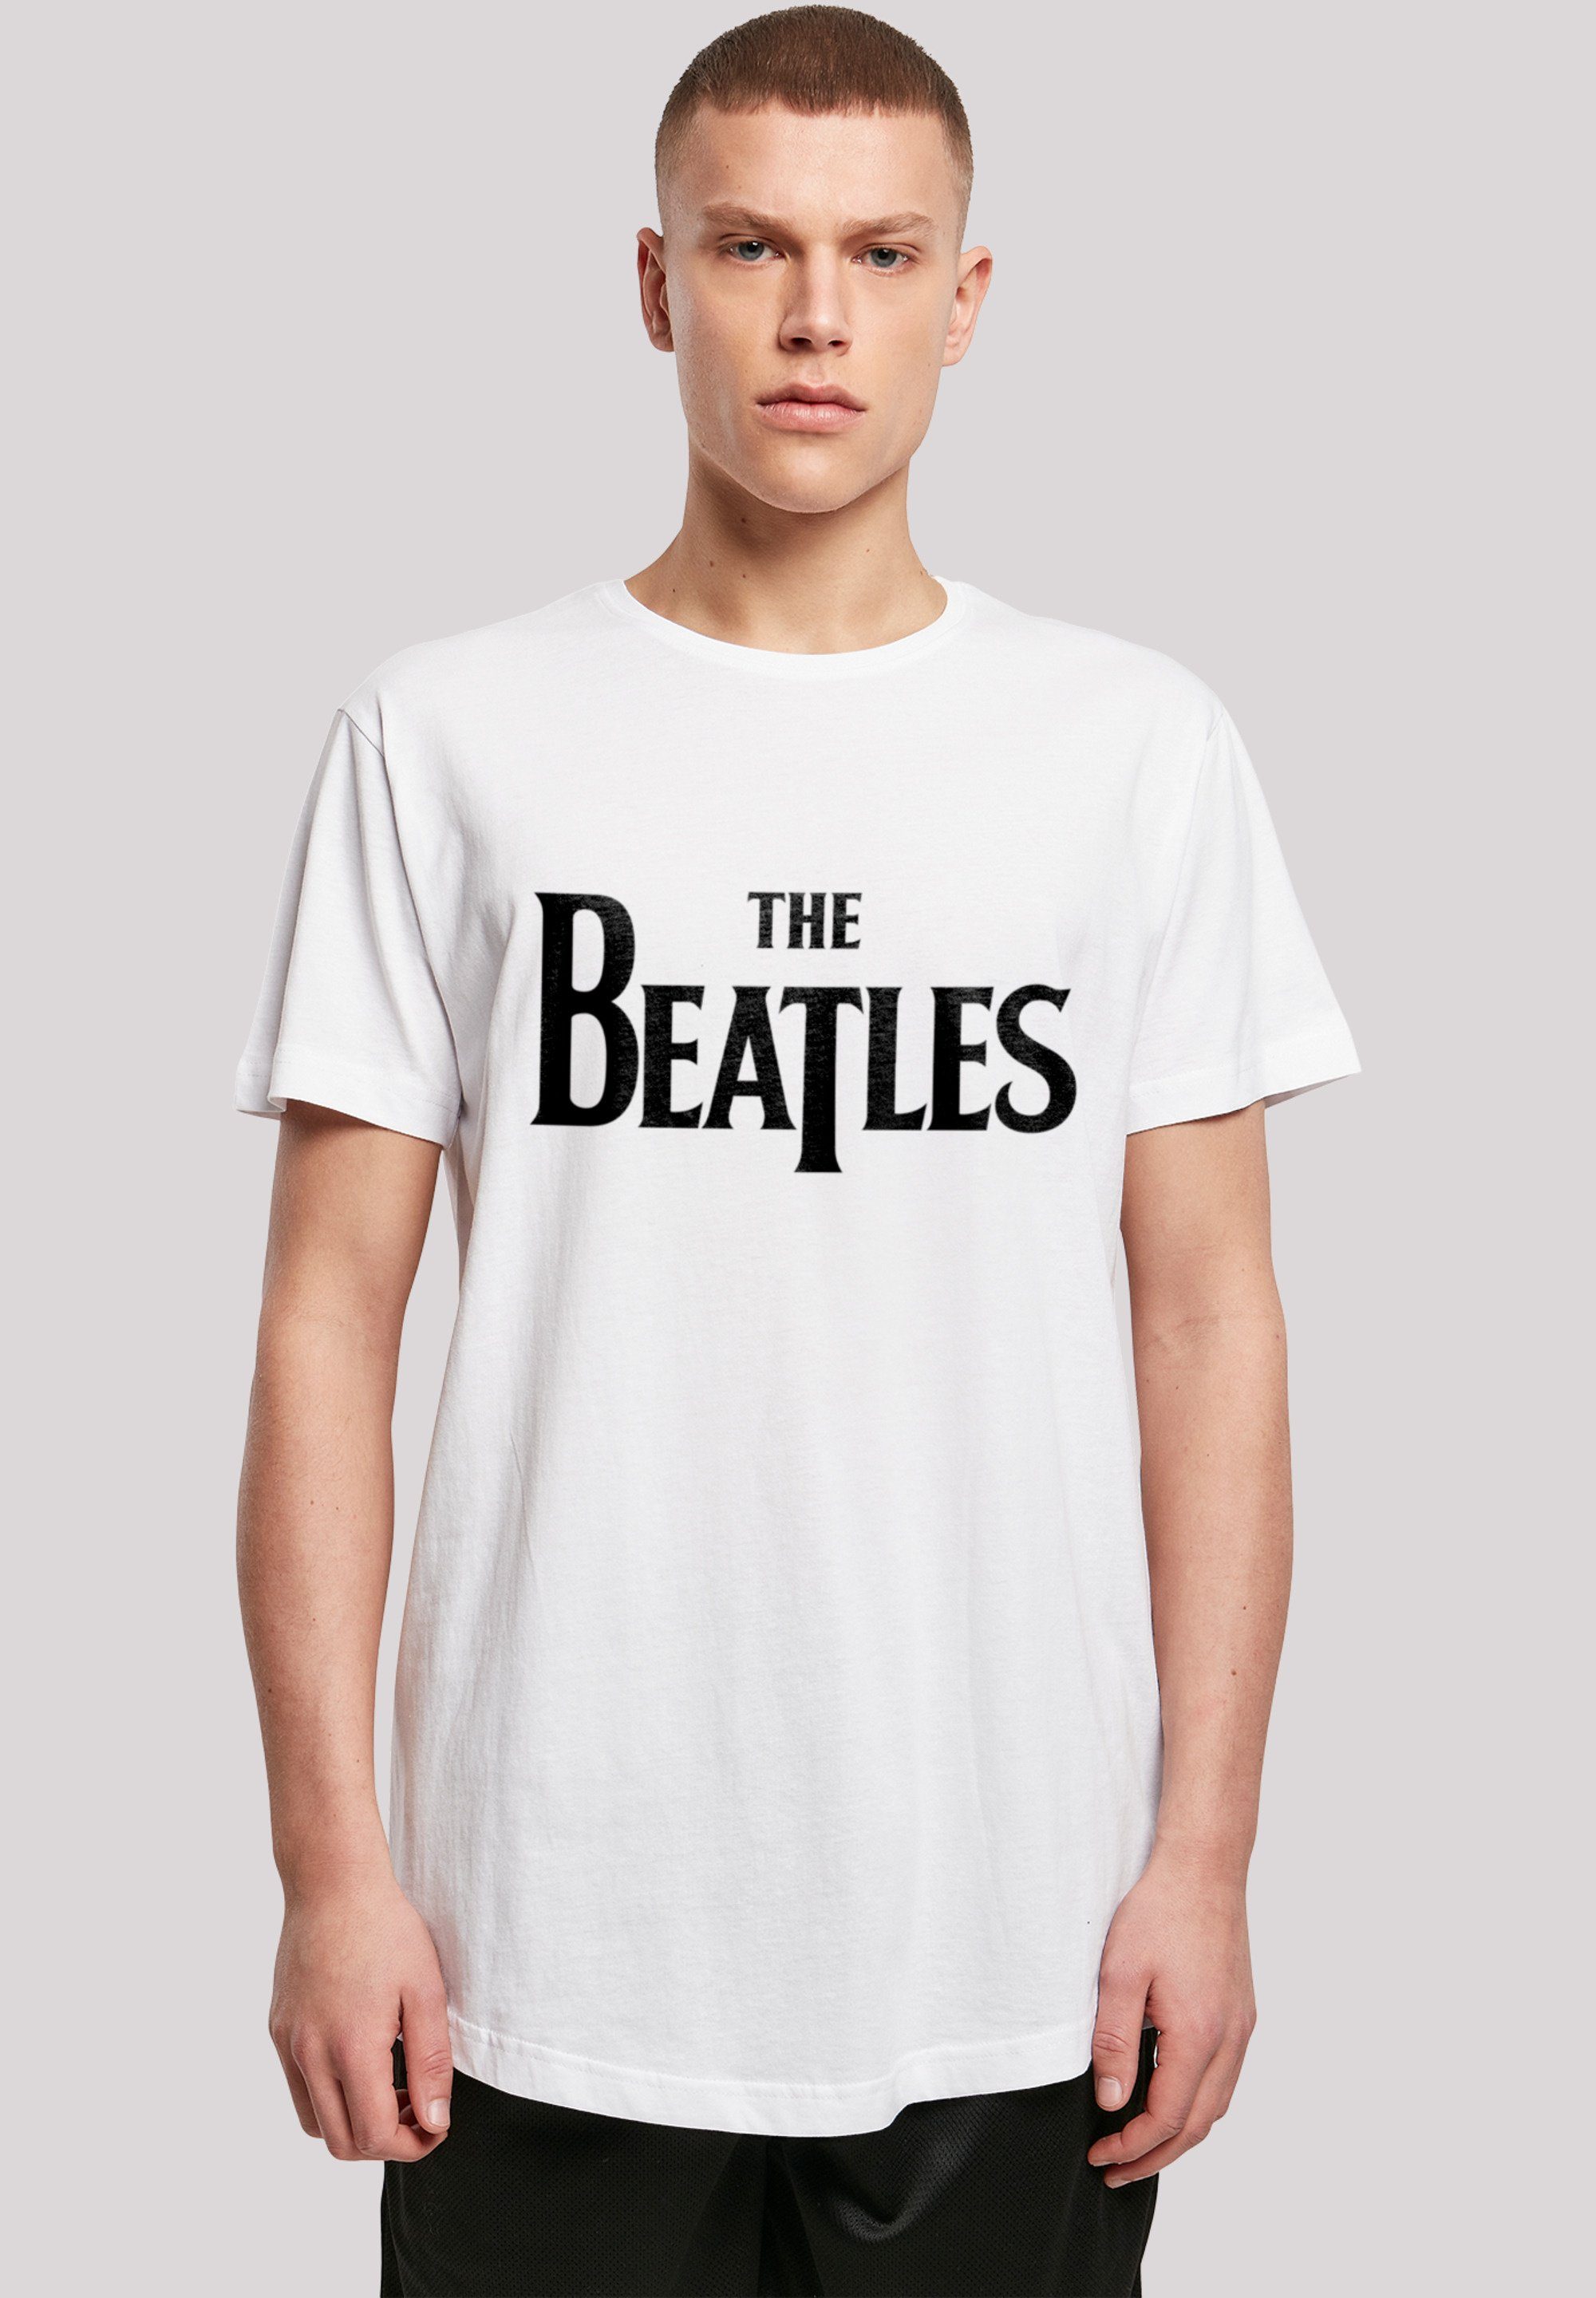 F4NT4STIC T-Shirt The Black Print, Drop weicher mit Tragekomfort Baumwollstoff Sehr T Logo hohem Beatles Band